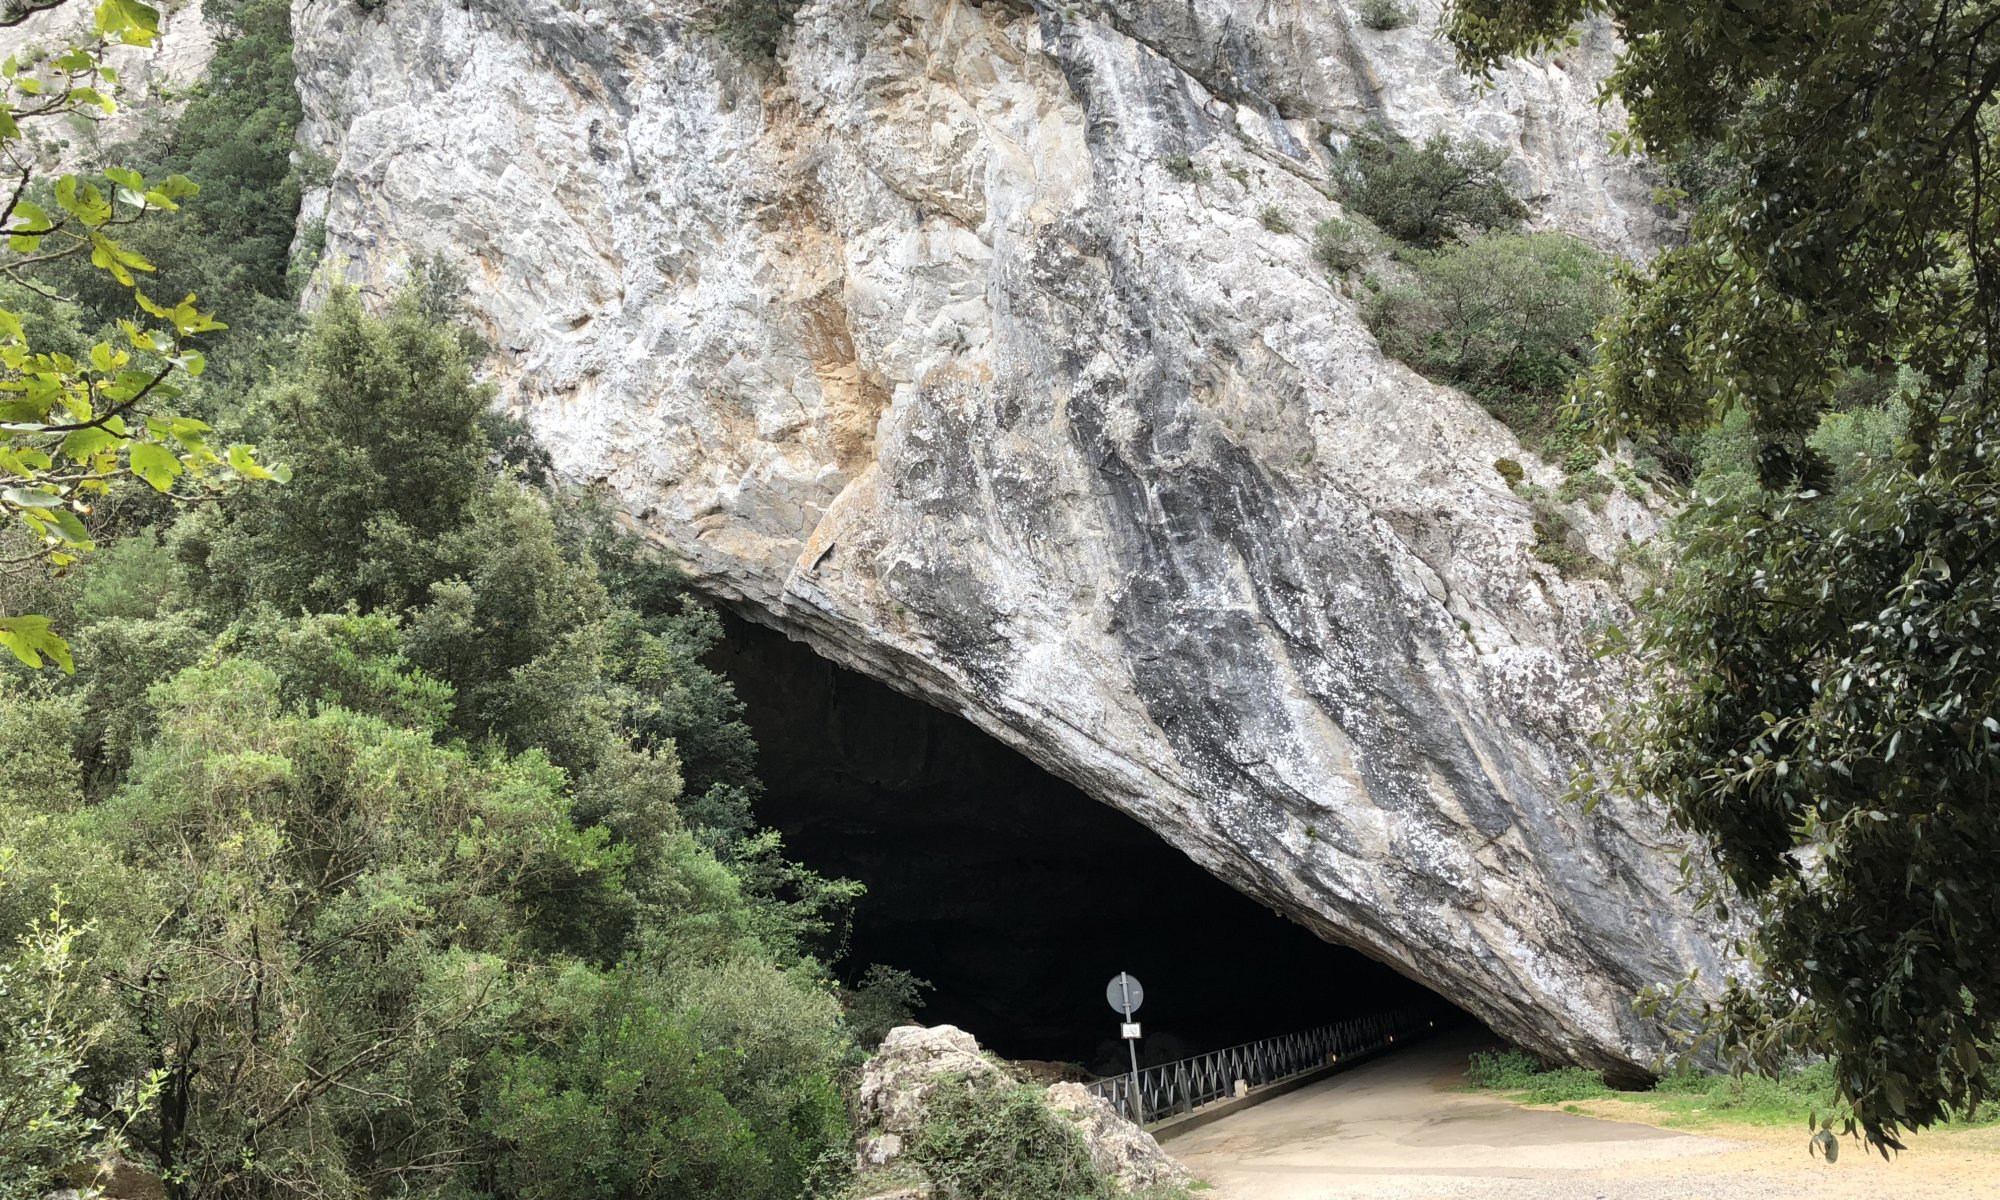 Grotta di San Giovanni, Domusnovas